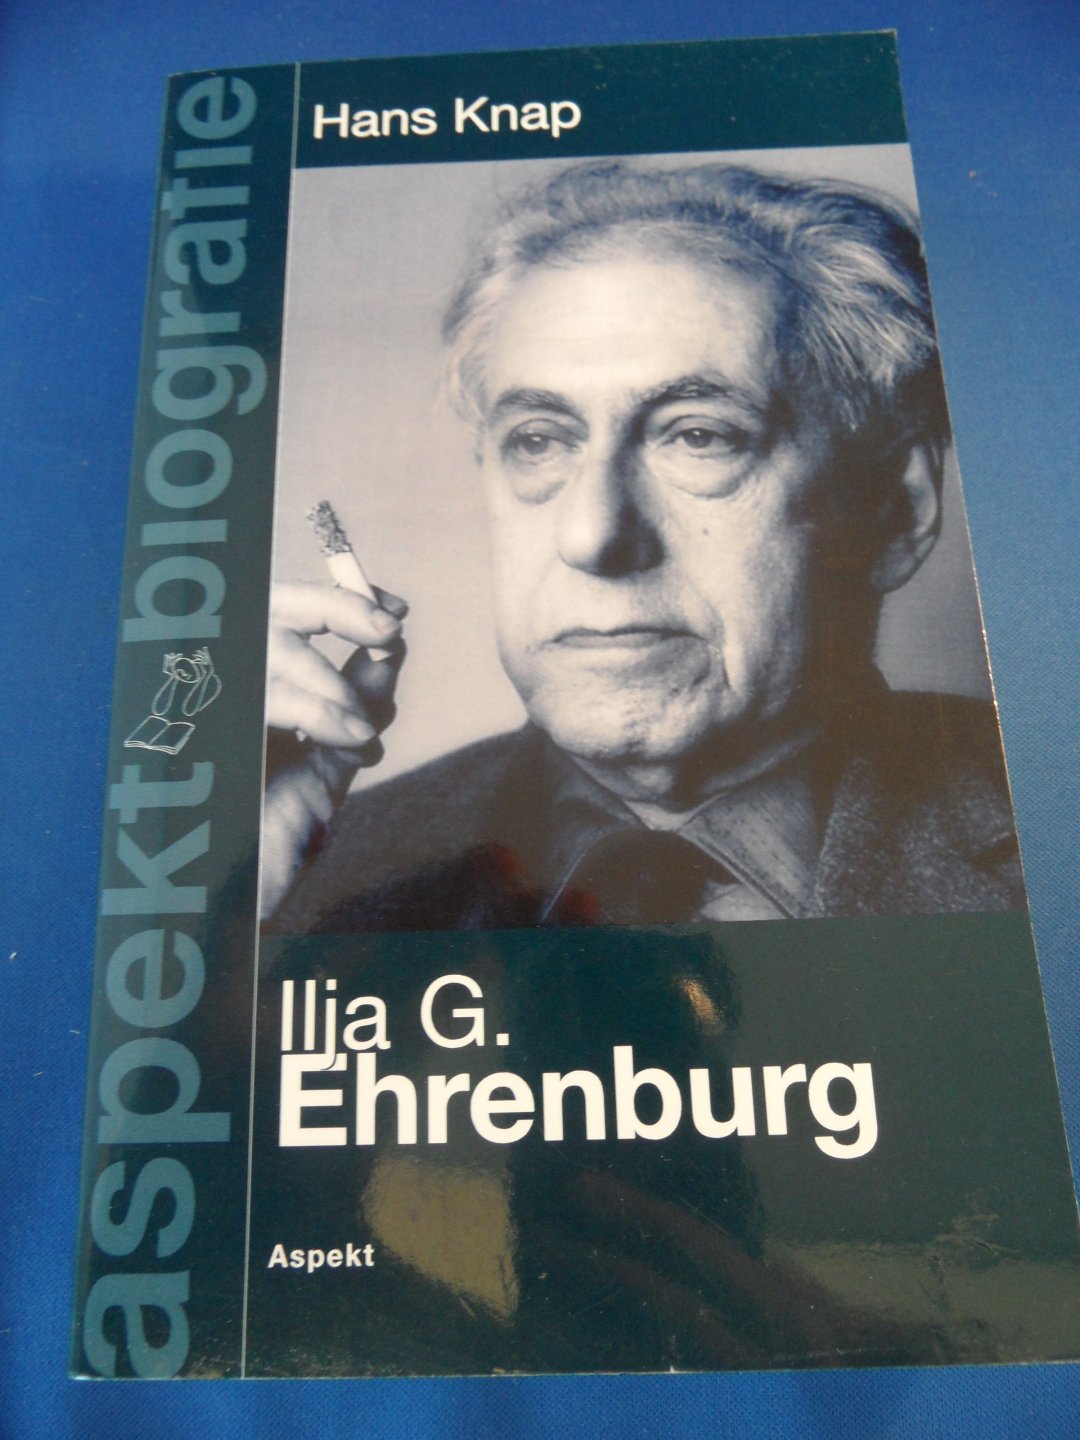 Knap, H. - Ilja G. Ehrenburg. Een Leven tussen Picasso en Stalin. Aspekt Biografie